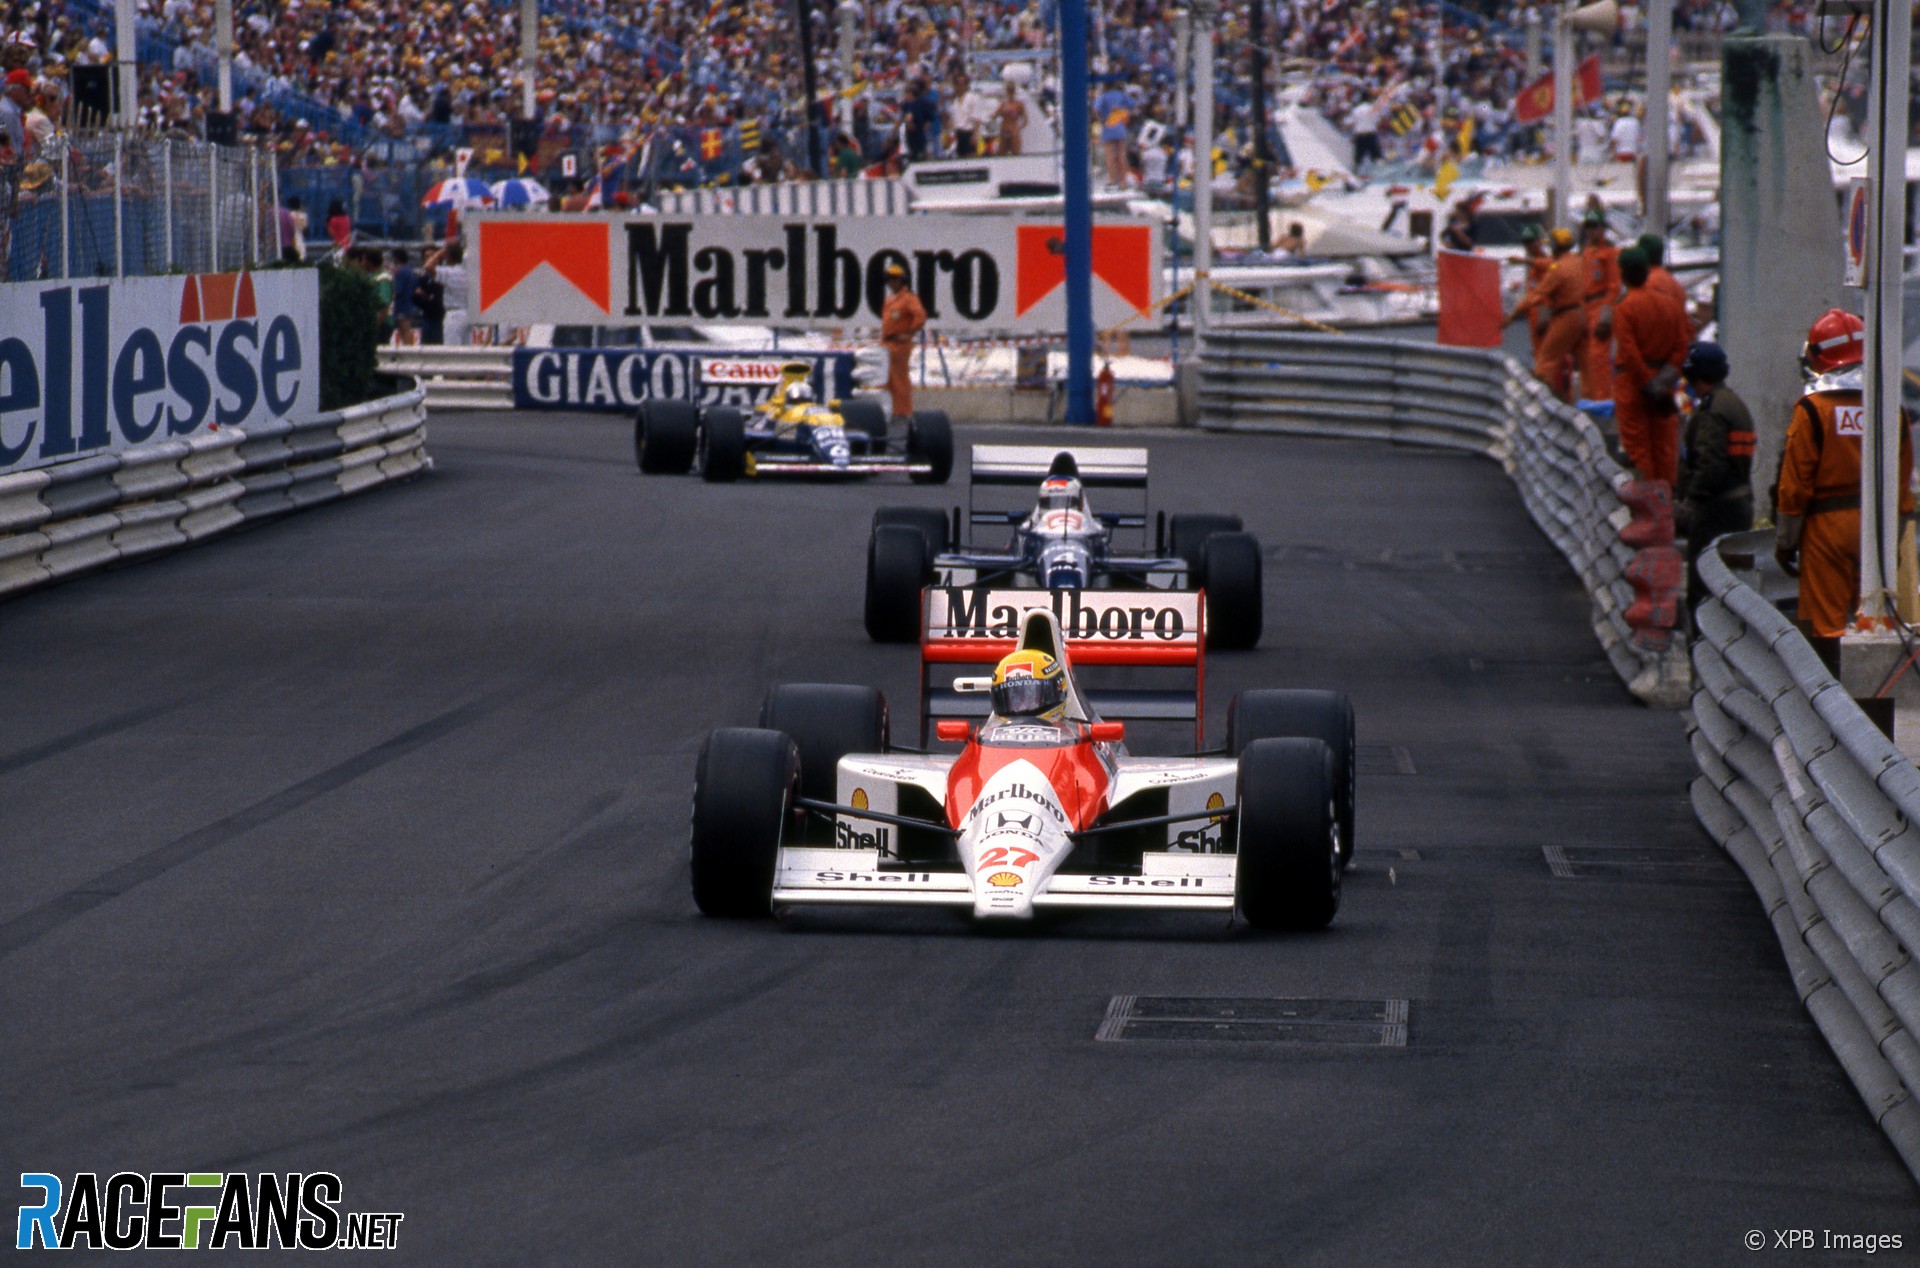 Ayrton Senna, Jean Alesi, Ricciardo Patrese, Monaco, 1990